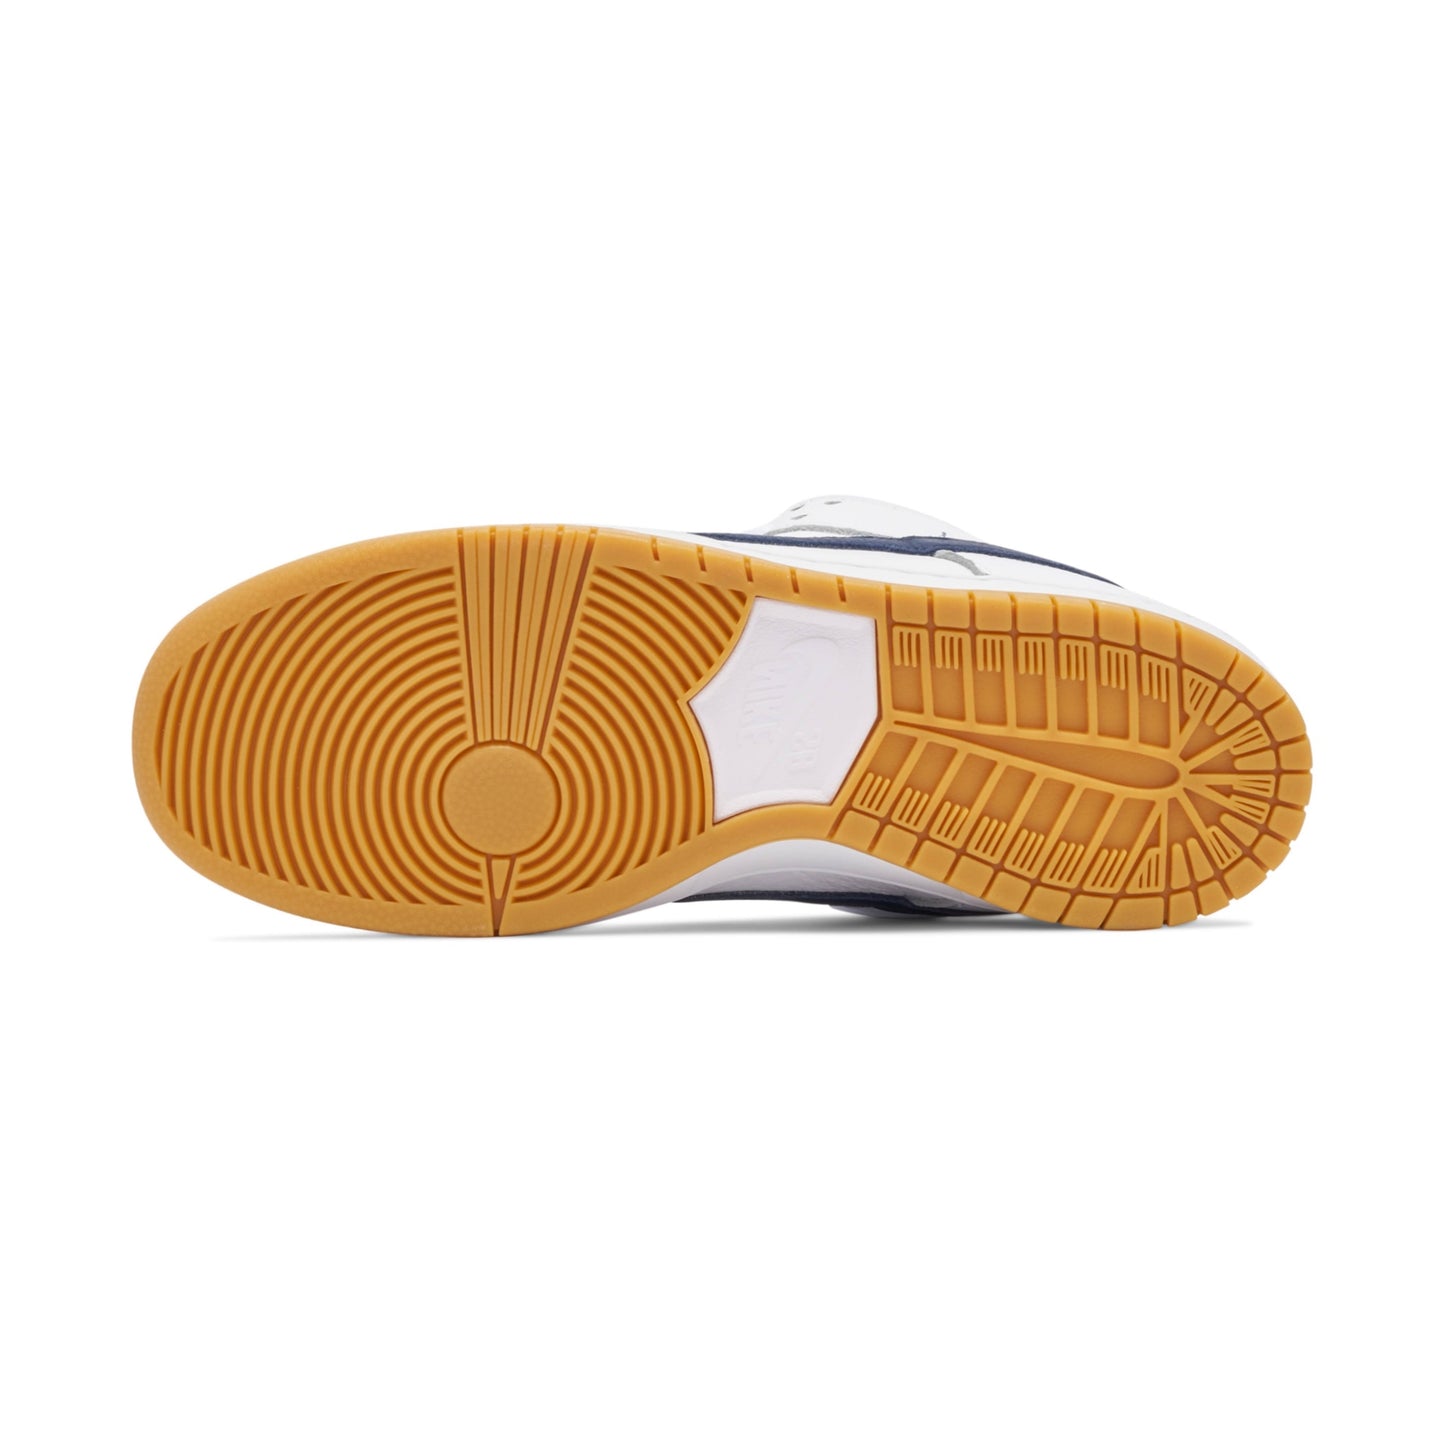 SB Dunk Low Orange Label White Navy by Nike